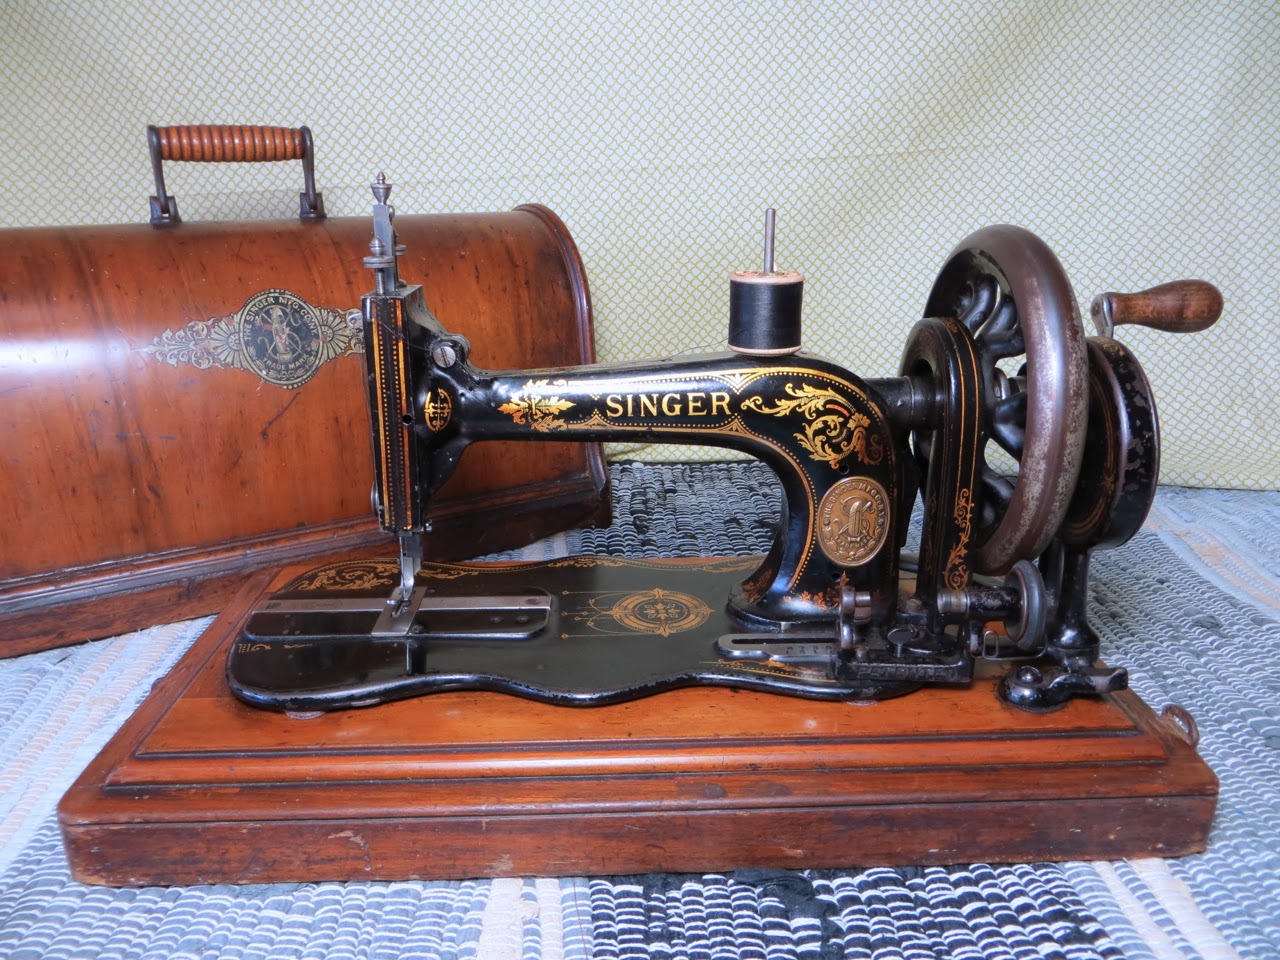 Швейная машинка karingbee. Швейная машинка (Zinger super 2001). Швейная машинка Зингер 12. Первая швейная машинка Зингер. Швейная машинка Зингер 1850.